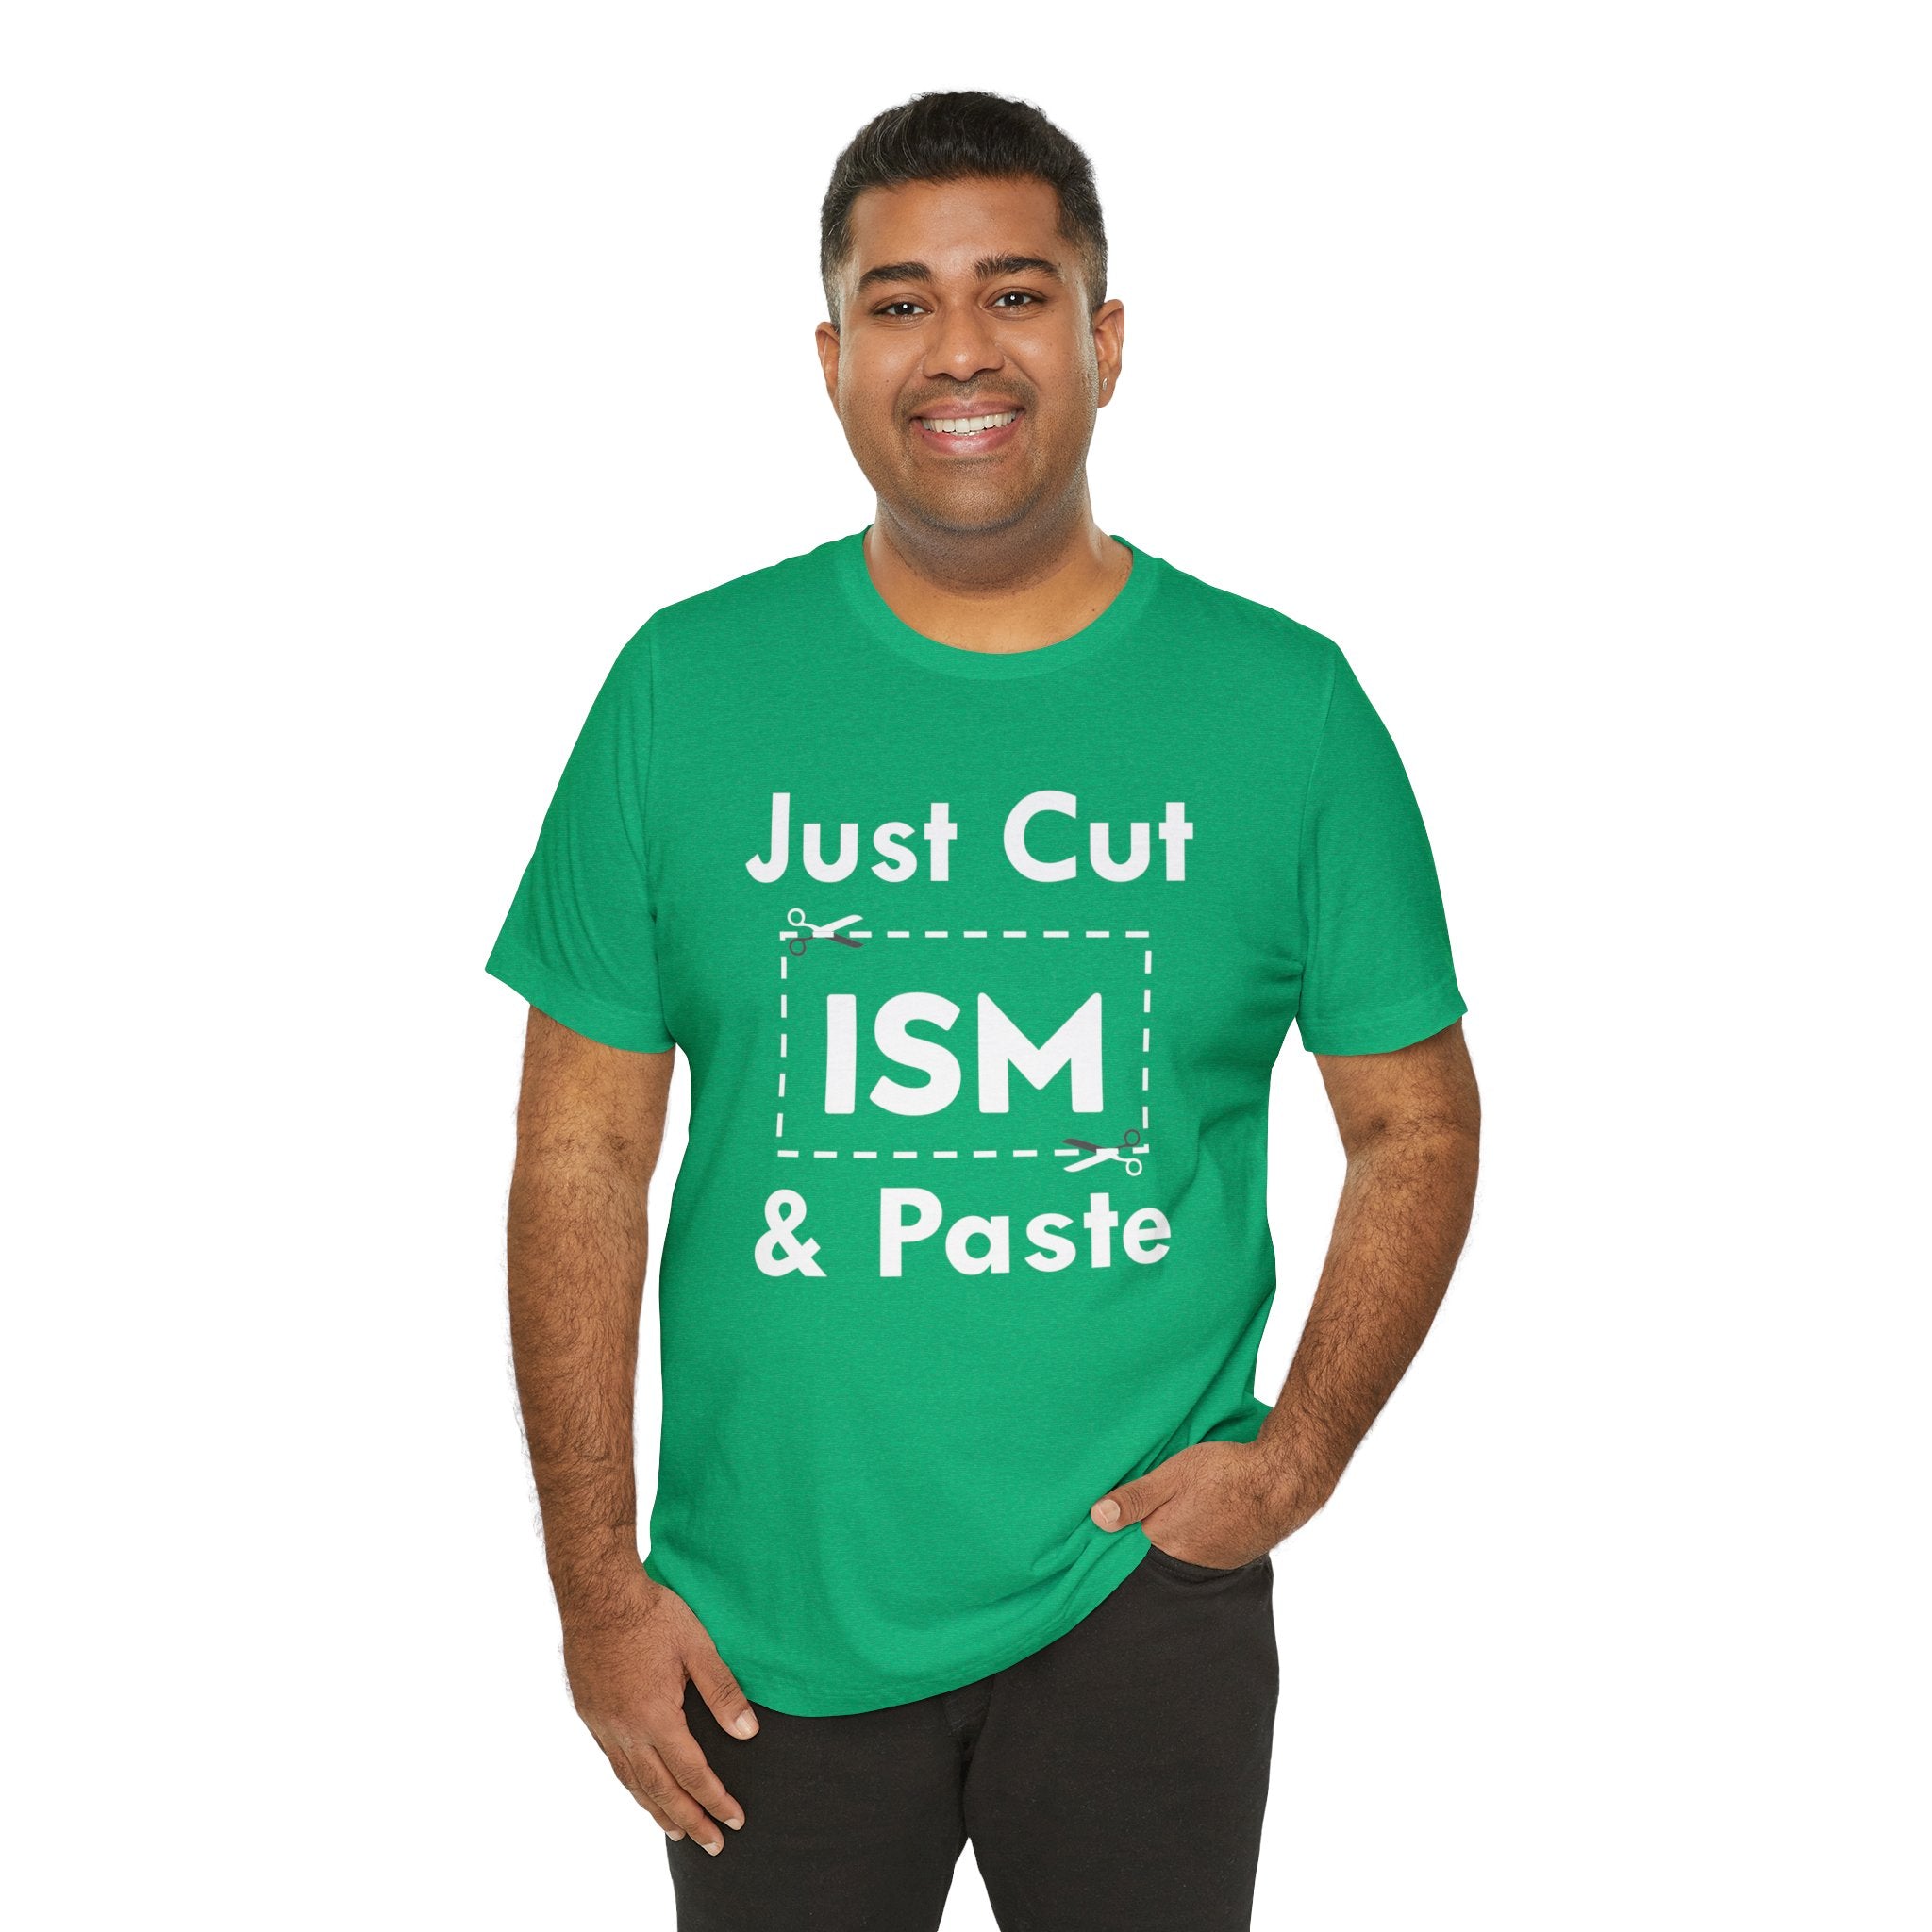 Just Cut & Paste - ISM